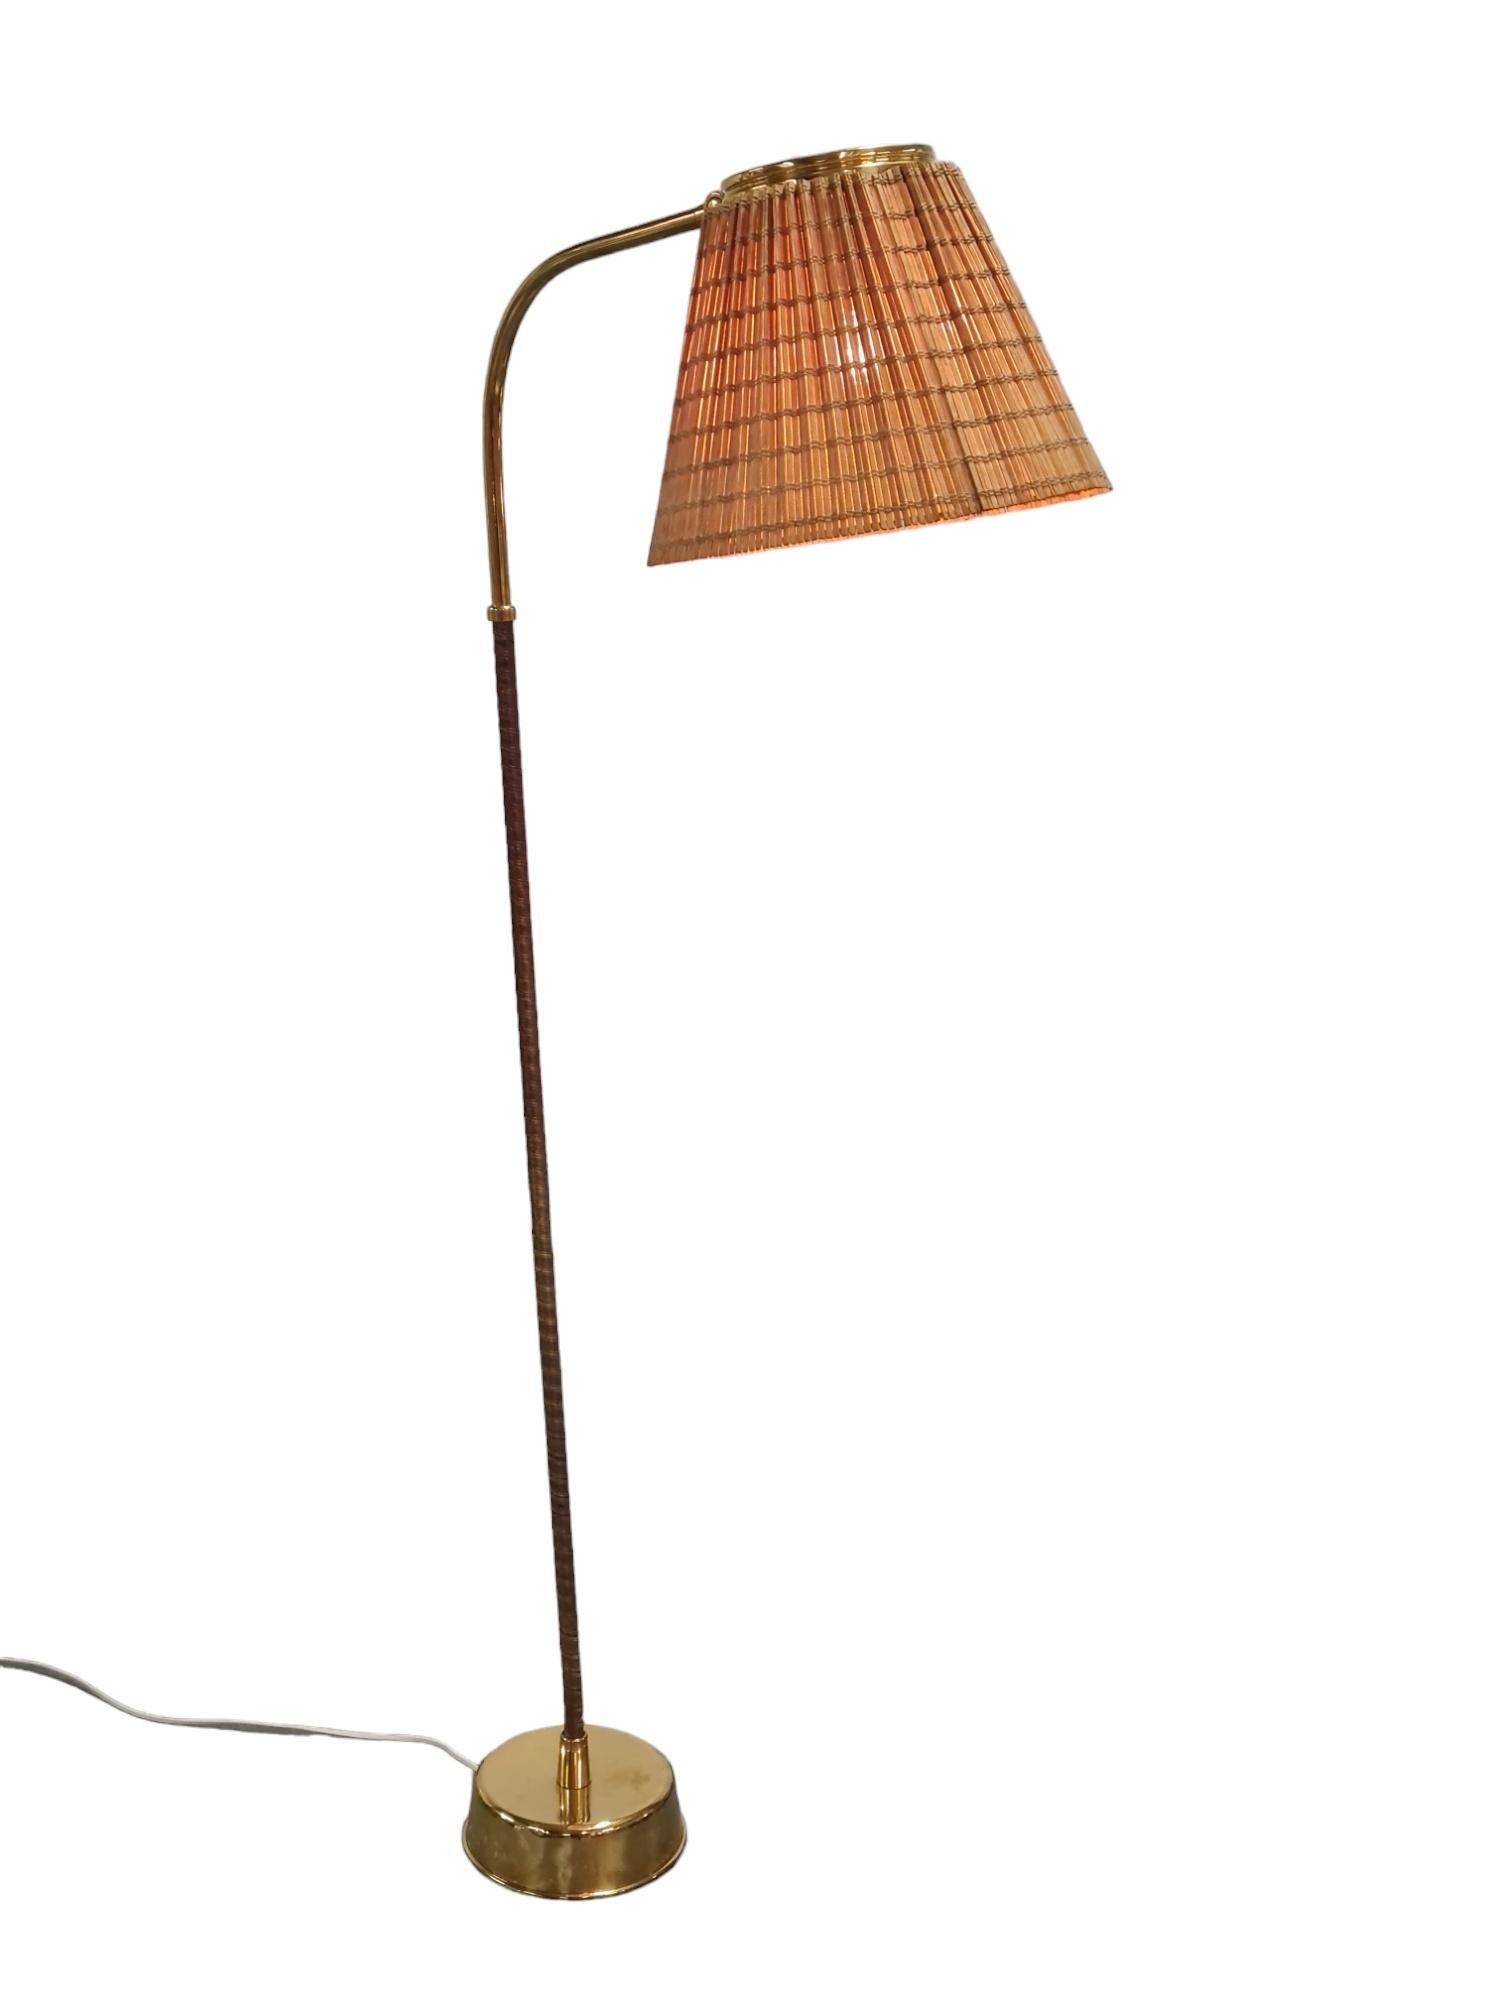 Scandinavian Modern Lisa Johansson-Pape, Floor Lamp Model 2063 in Rattan, Orno For Sale